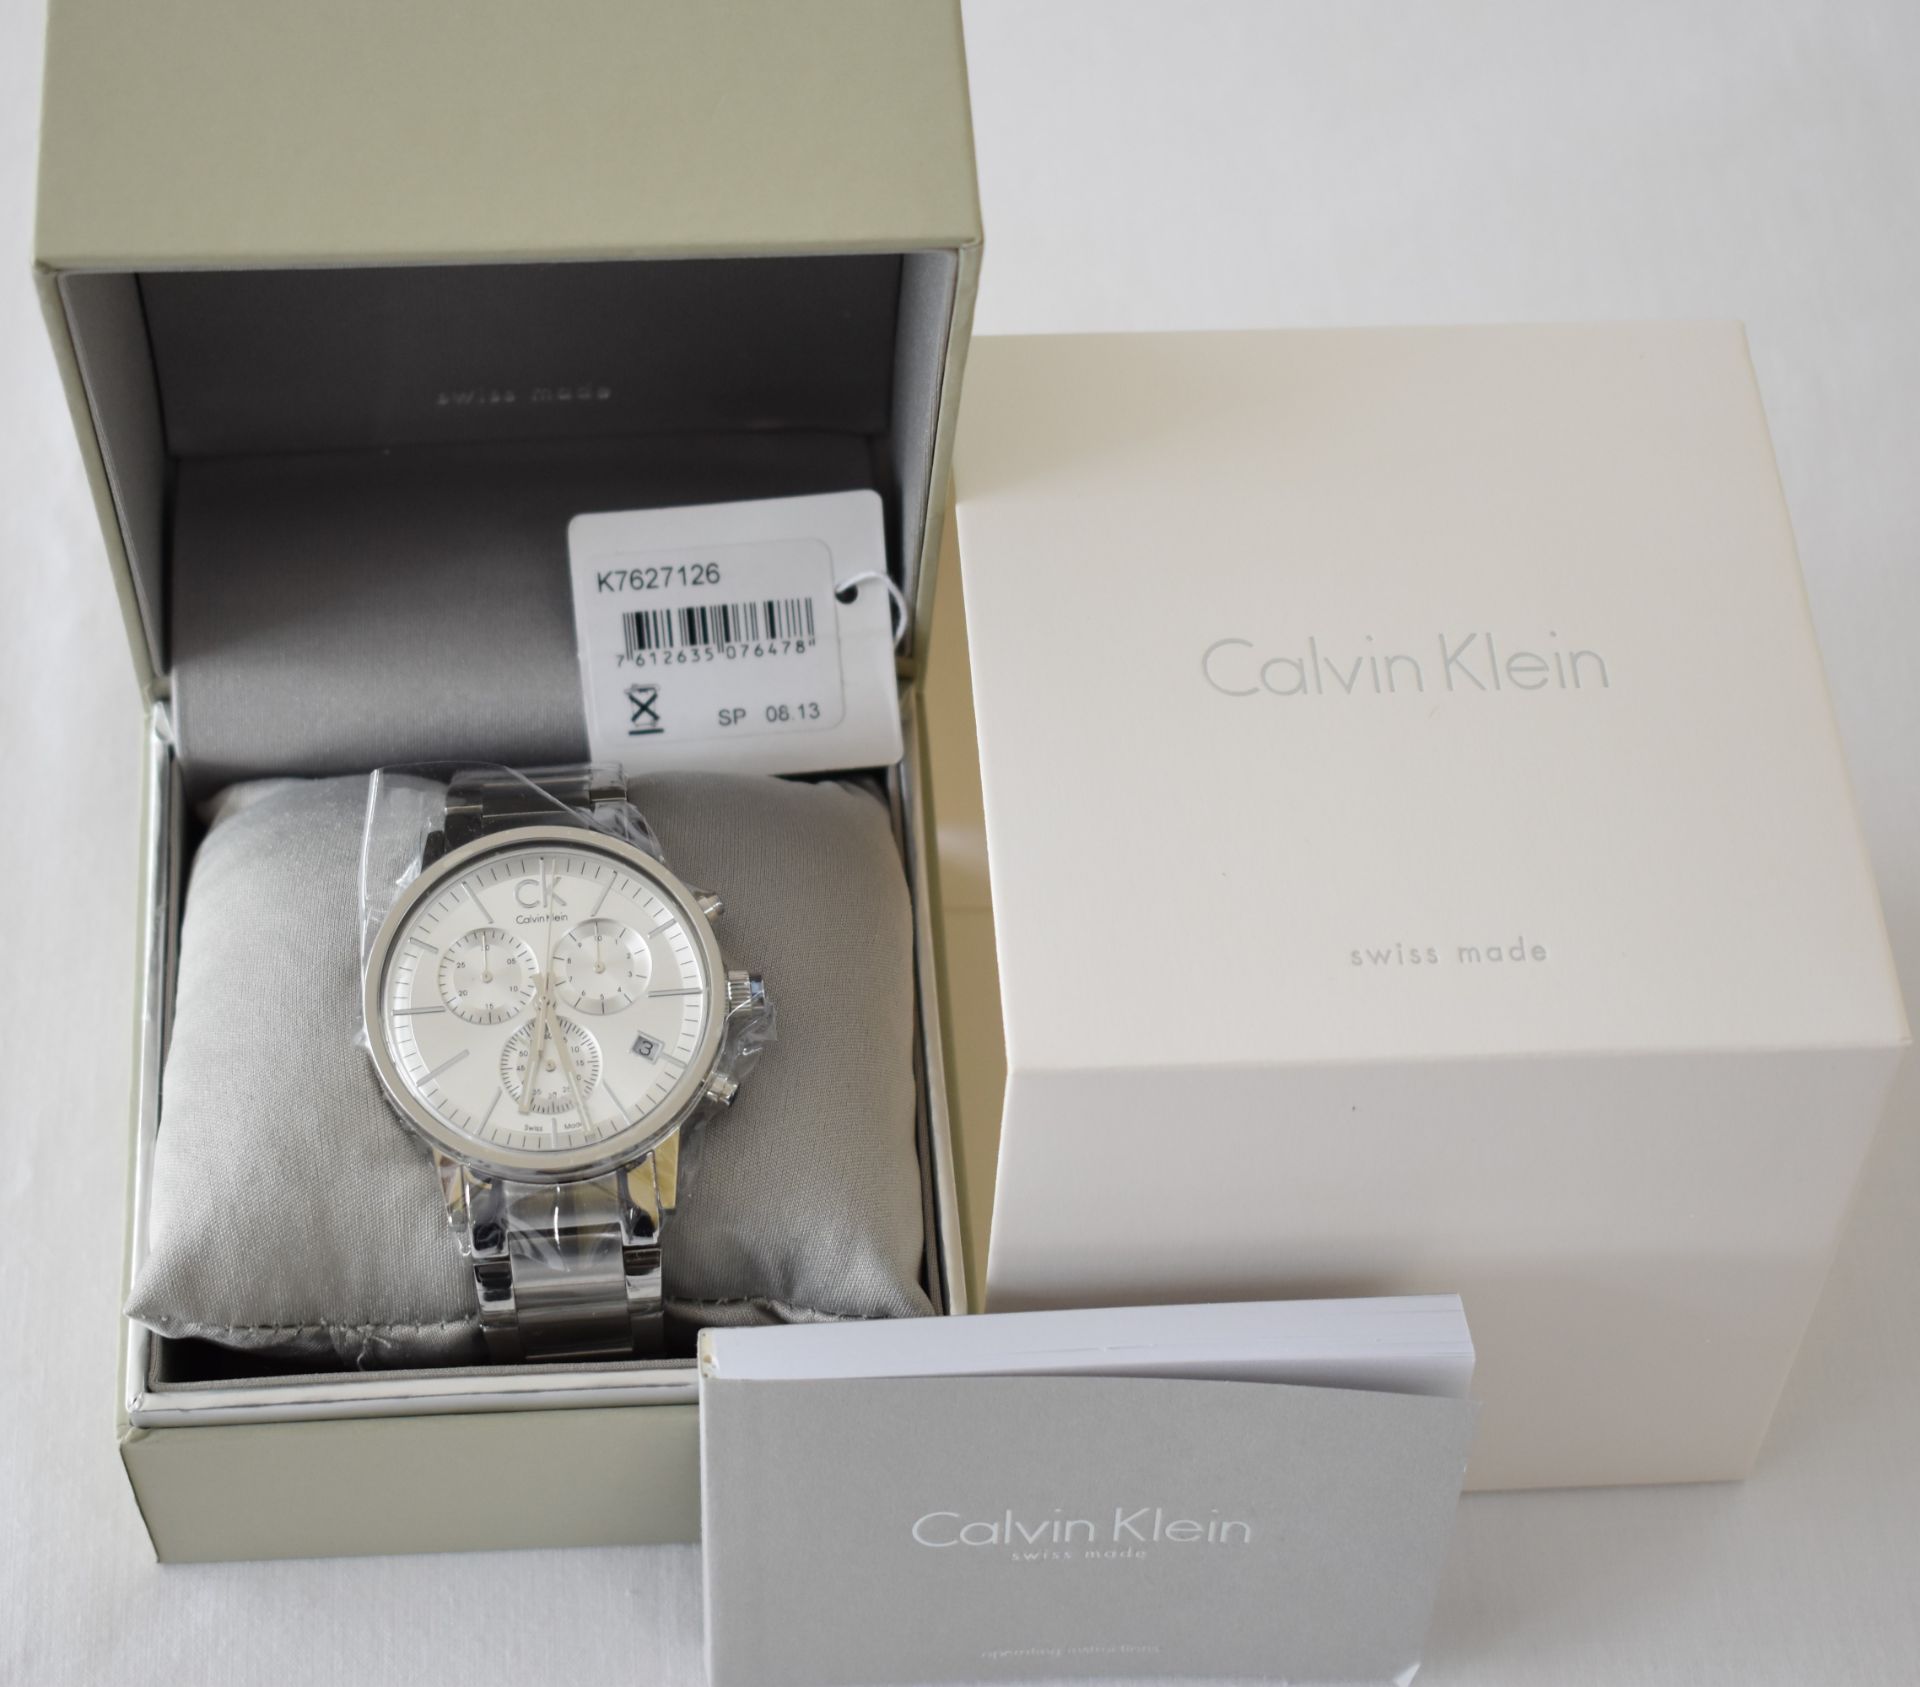 Calvin Klein K7627126 Men's Watch - Image 2 of 2